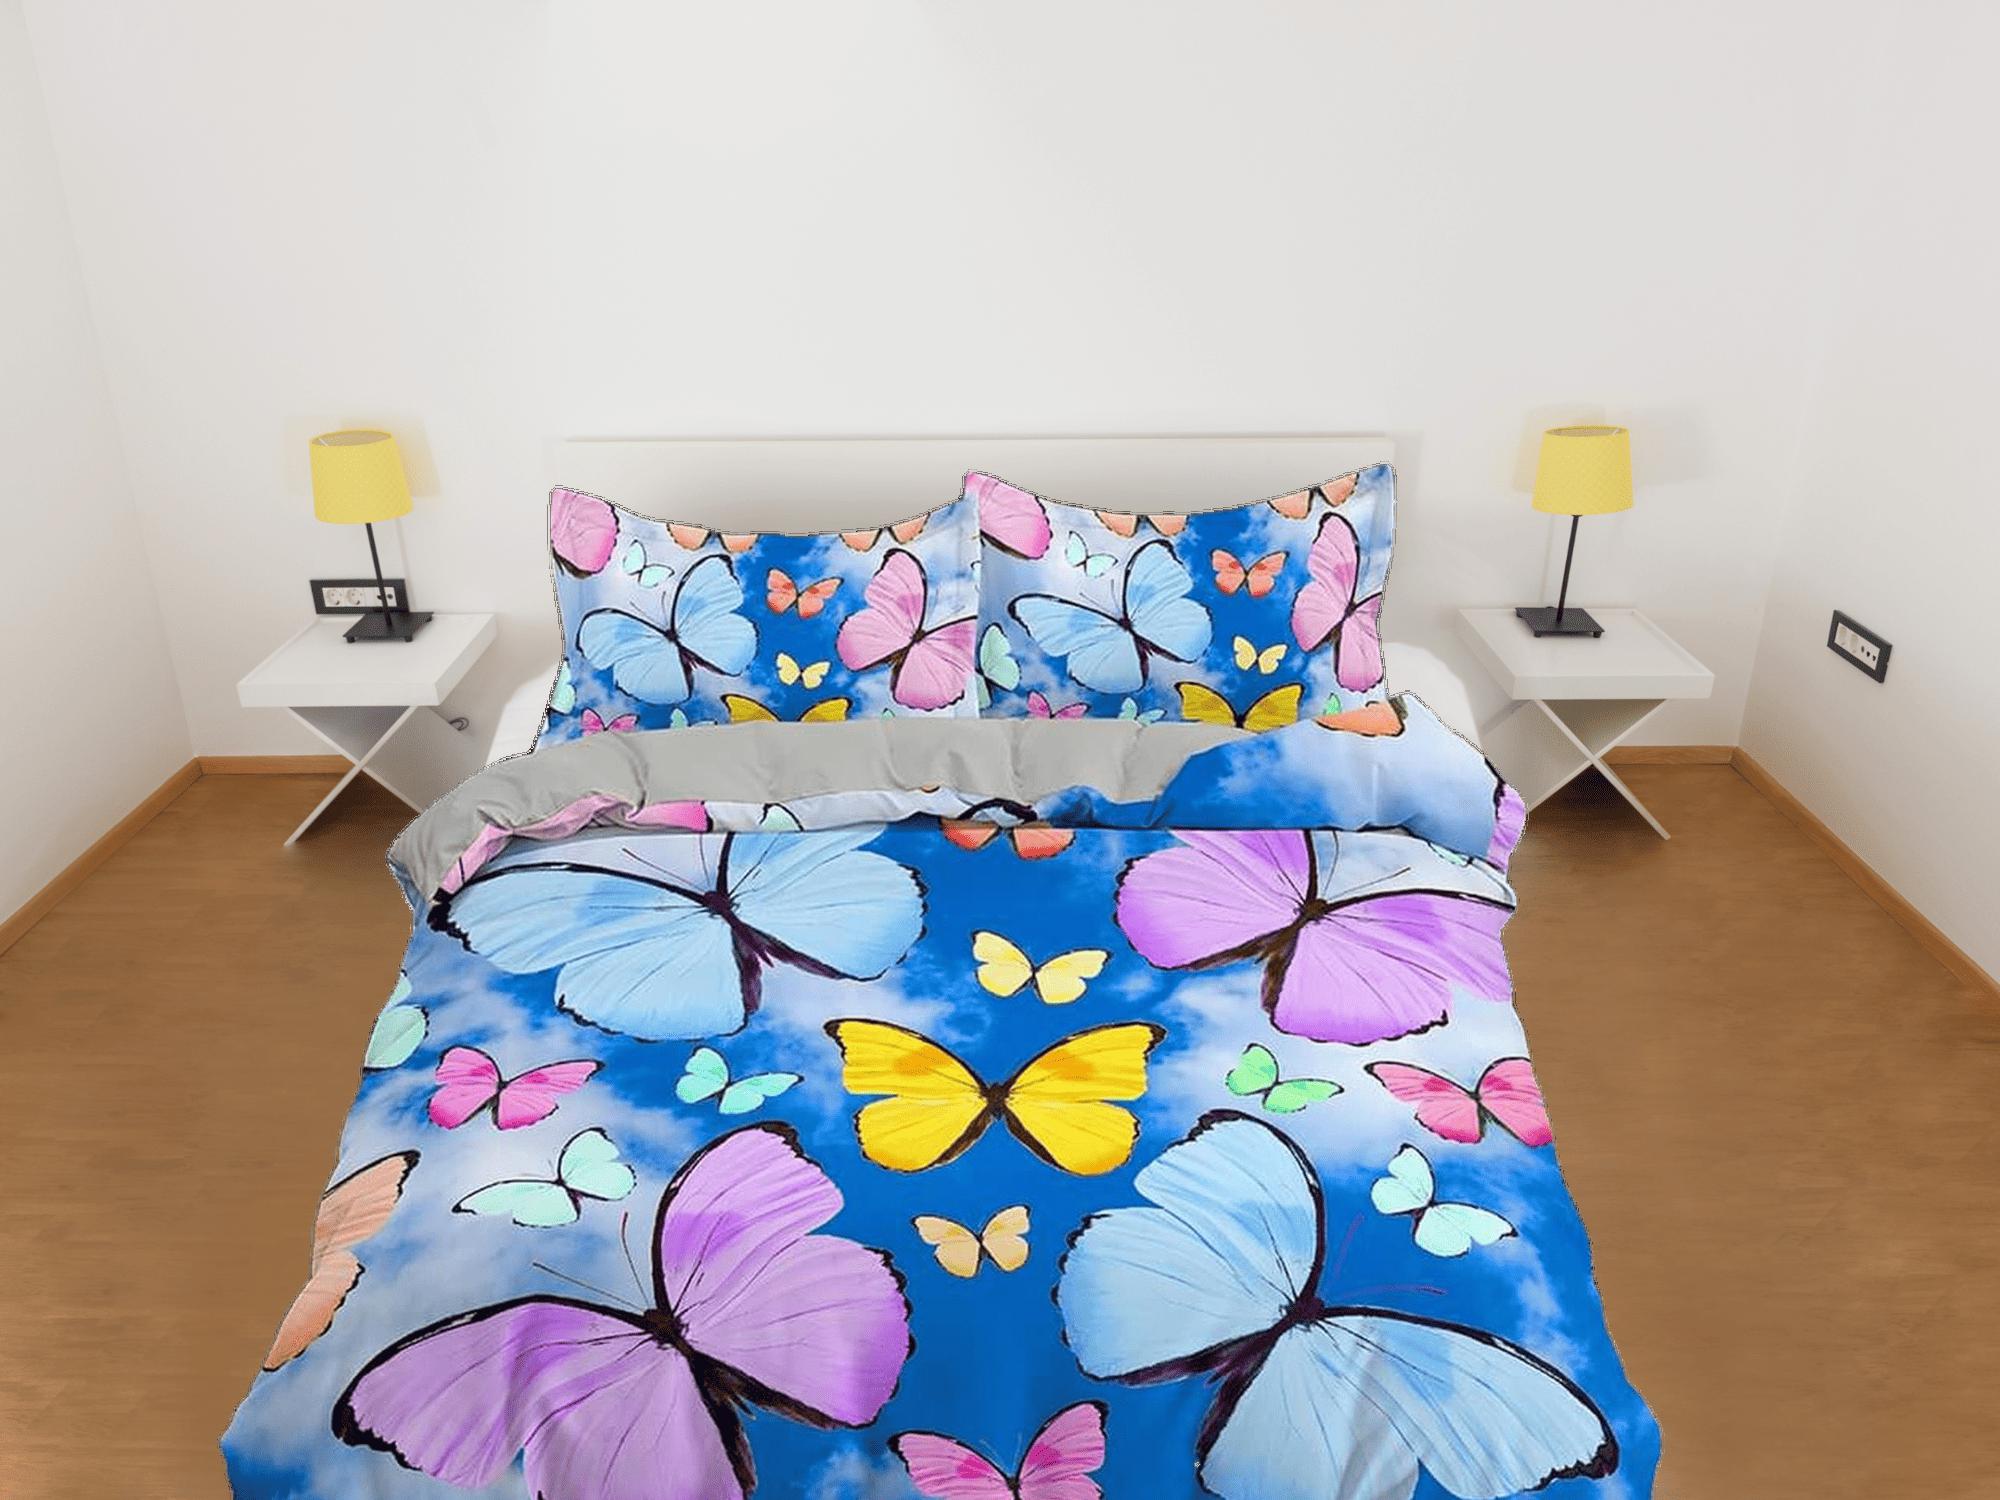 daintyduvet Colorful butterfly bedding blue duvet cover dorm bedding, full size adult duvet king queen twin, butterfly nursery toddler bedding